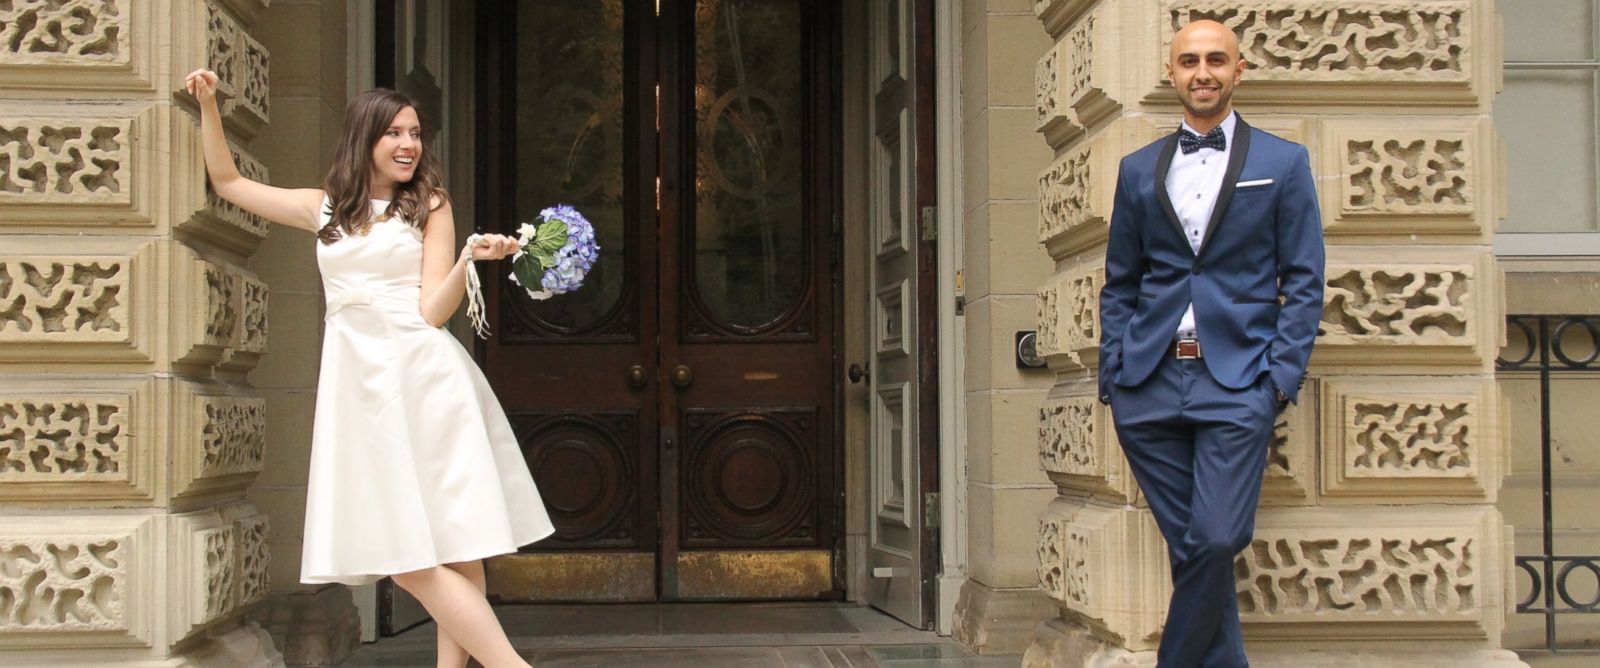 Toronto Couple Cancels Big Wedding to Help Sponsor Syrian Refugee Family Instead